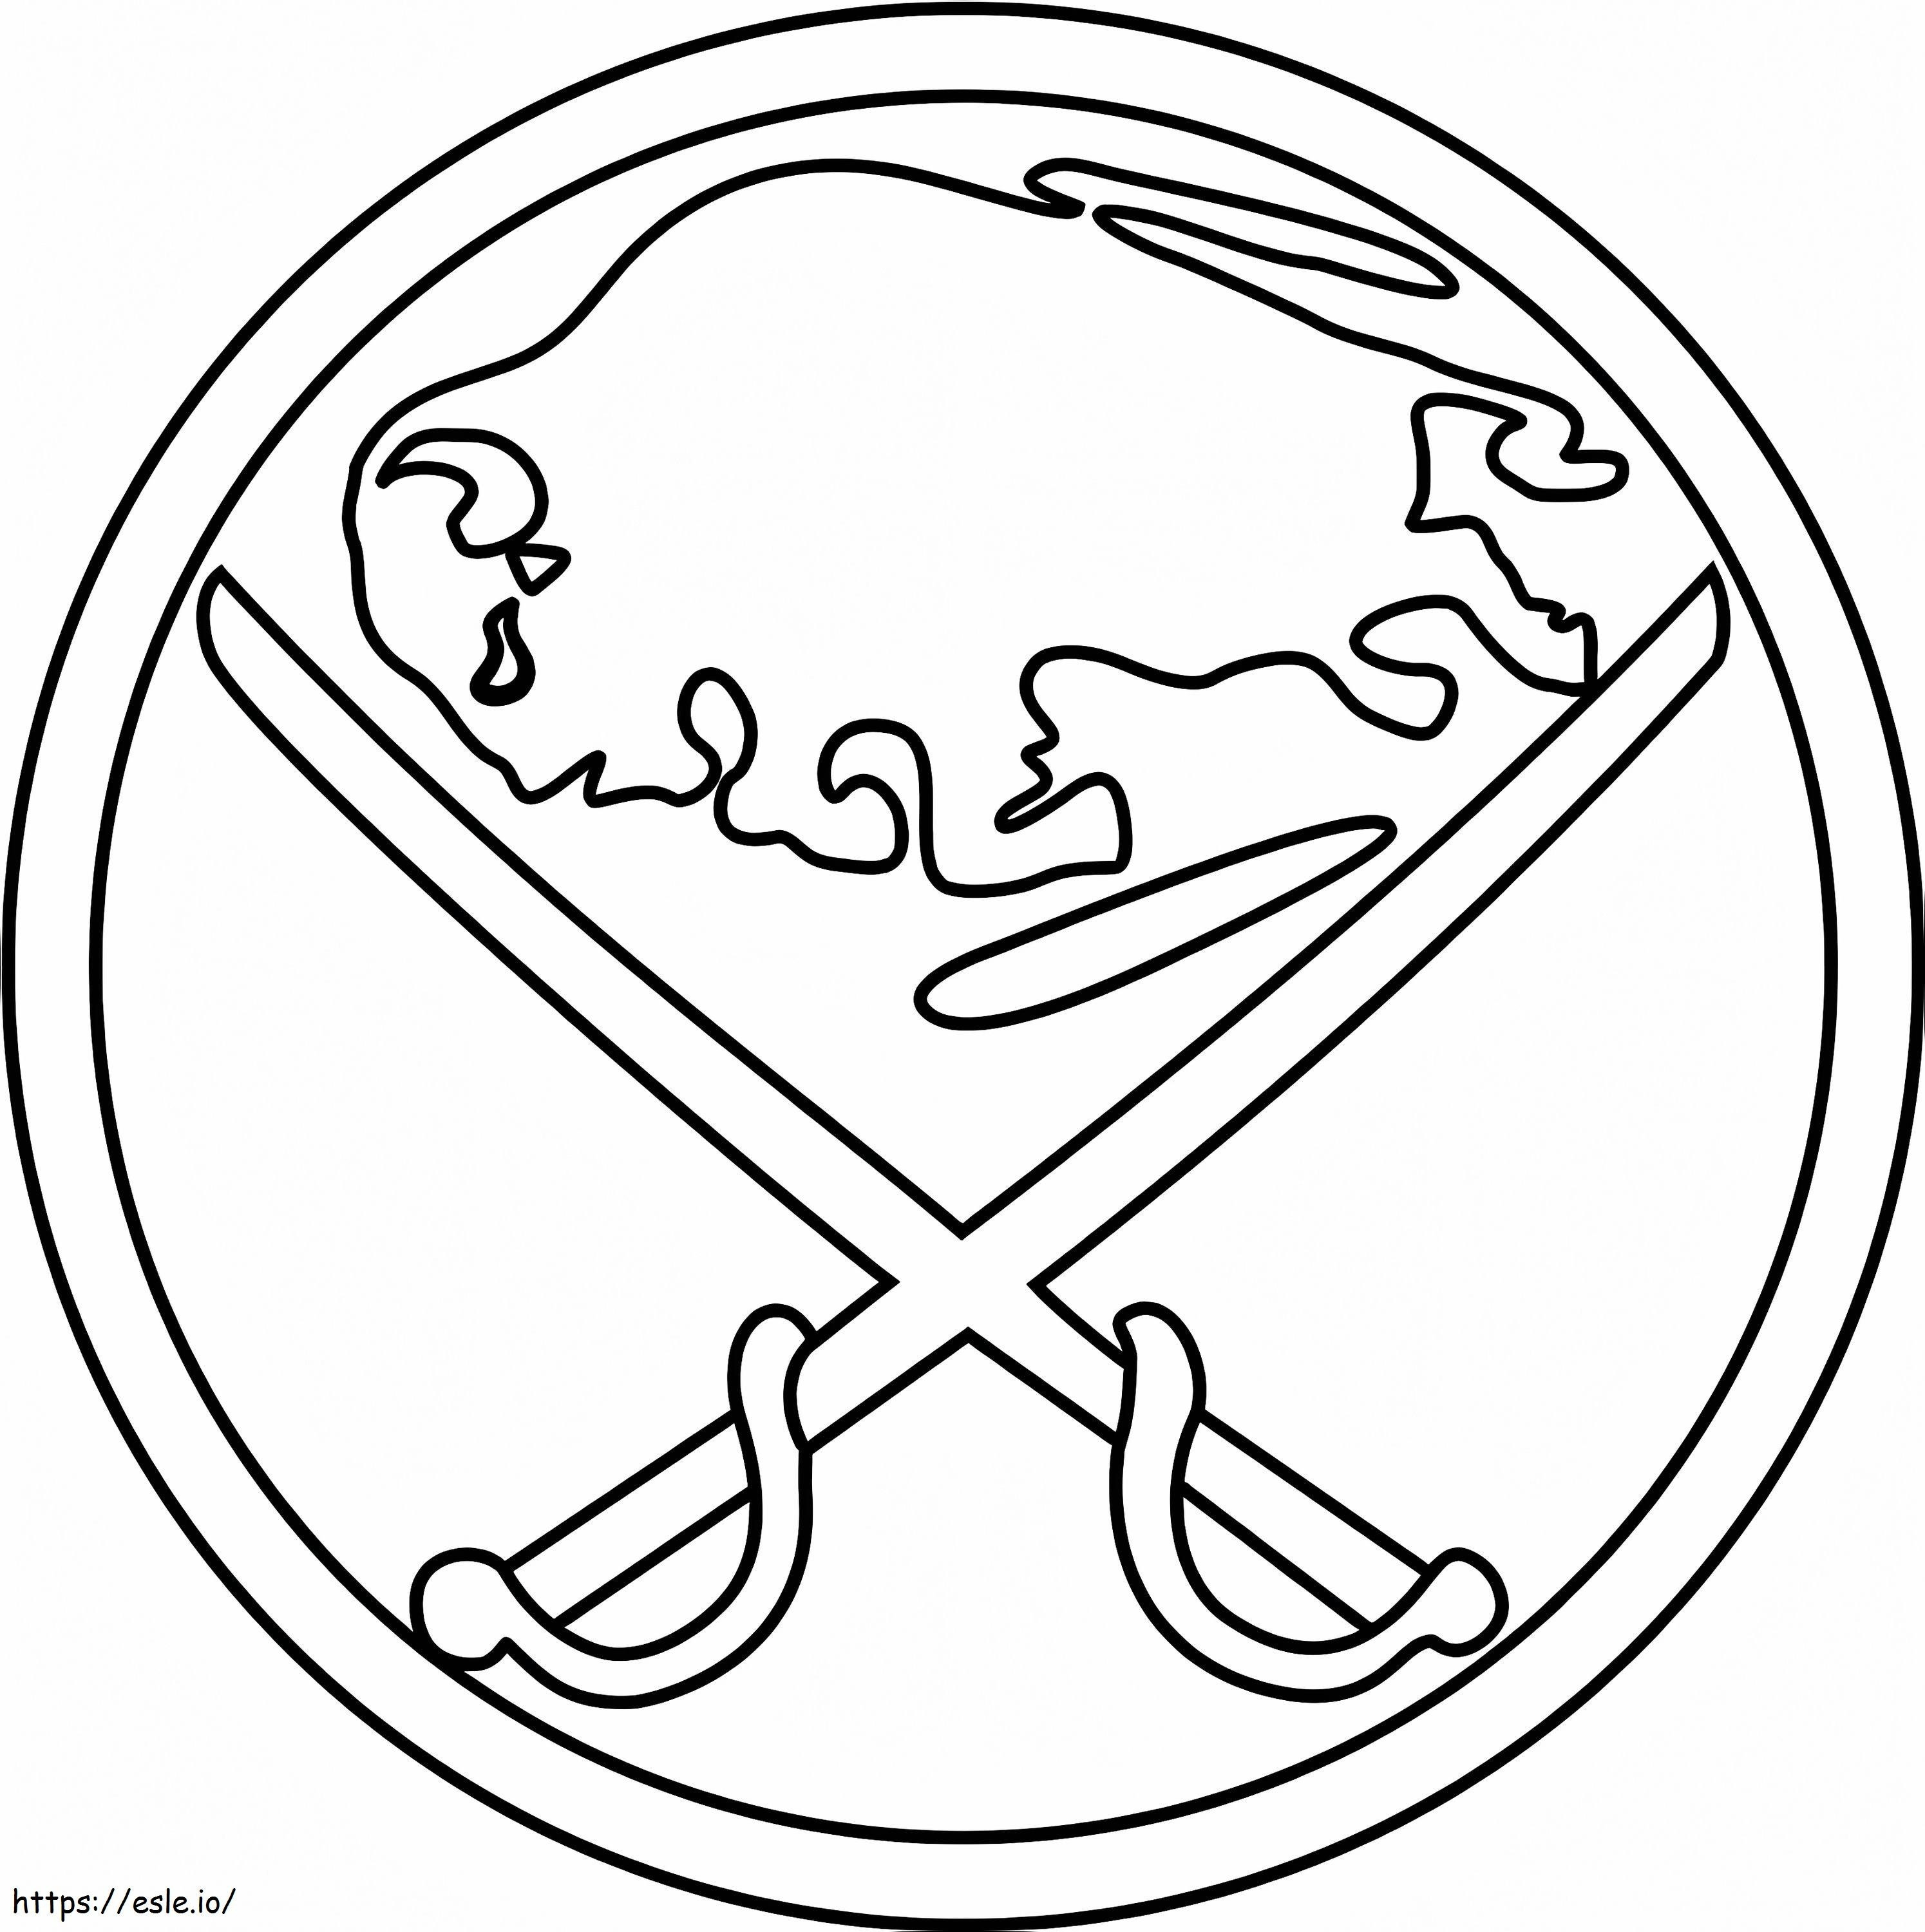 Coloriage Logo des Sabres de Buffalo à imprimer dessin